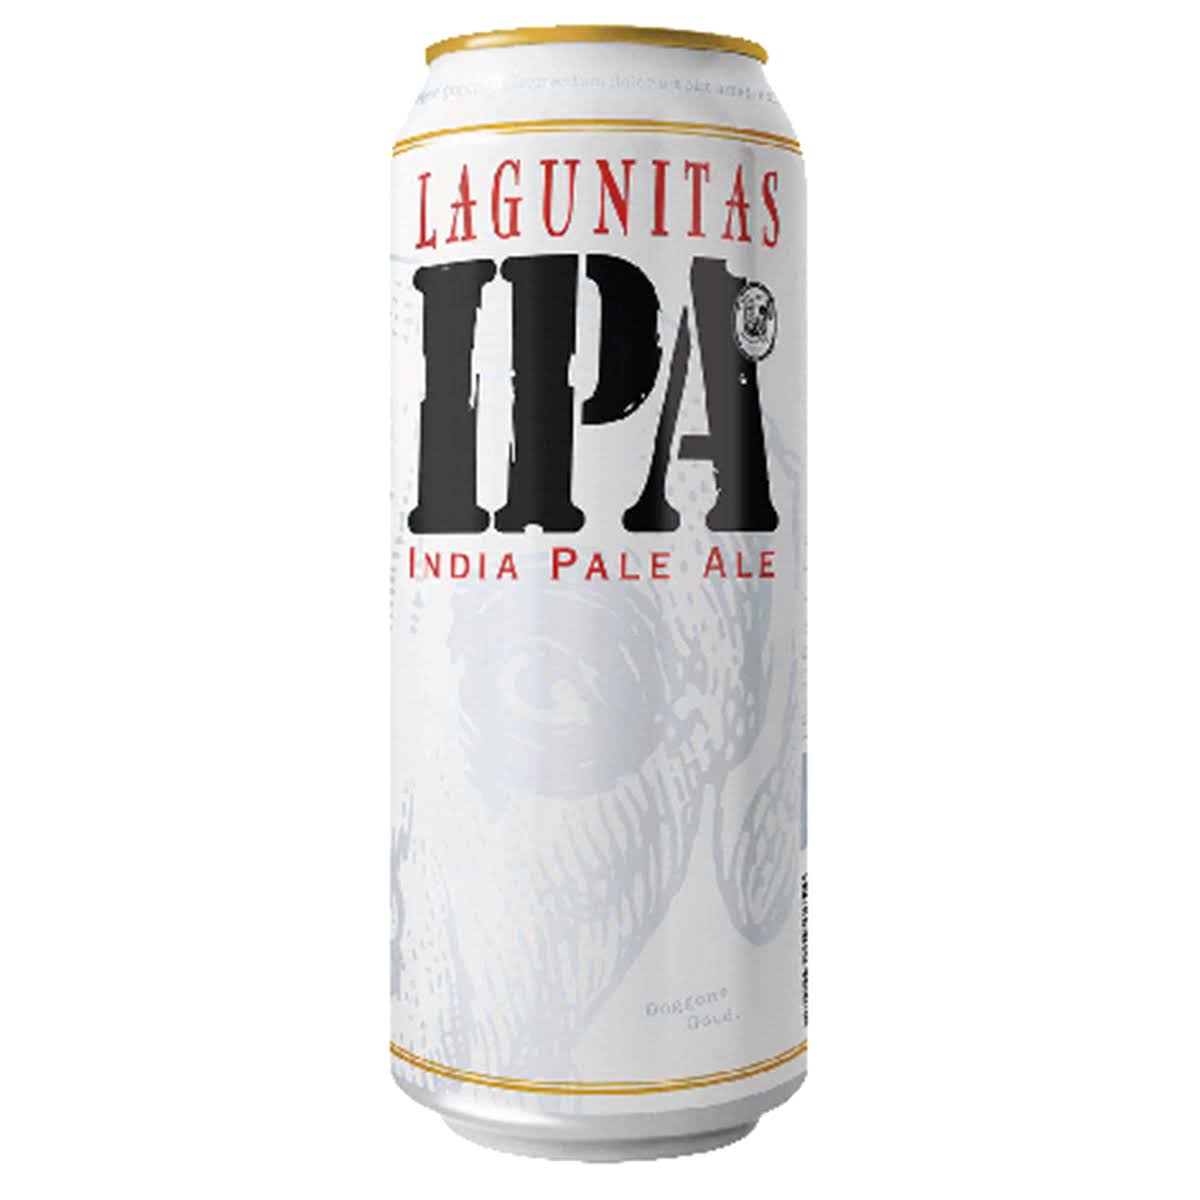 Lagunitas Beer, India Pale Ale - 1 pint